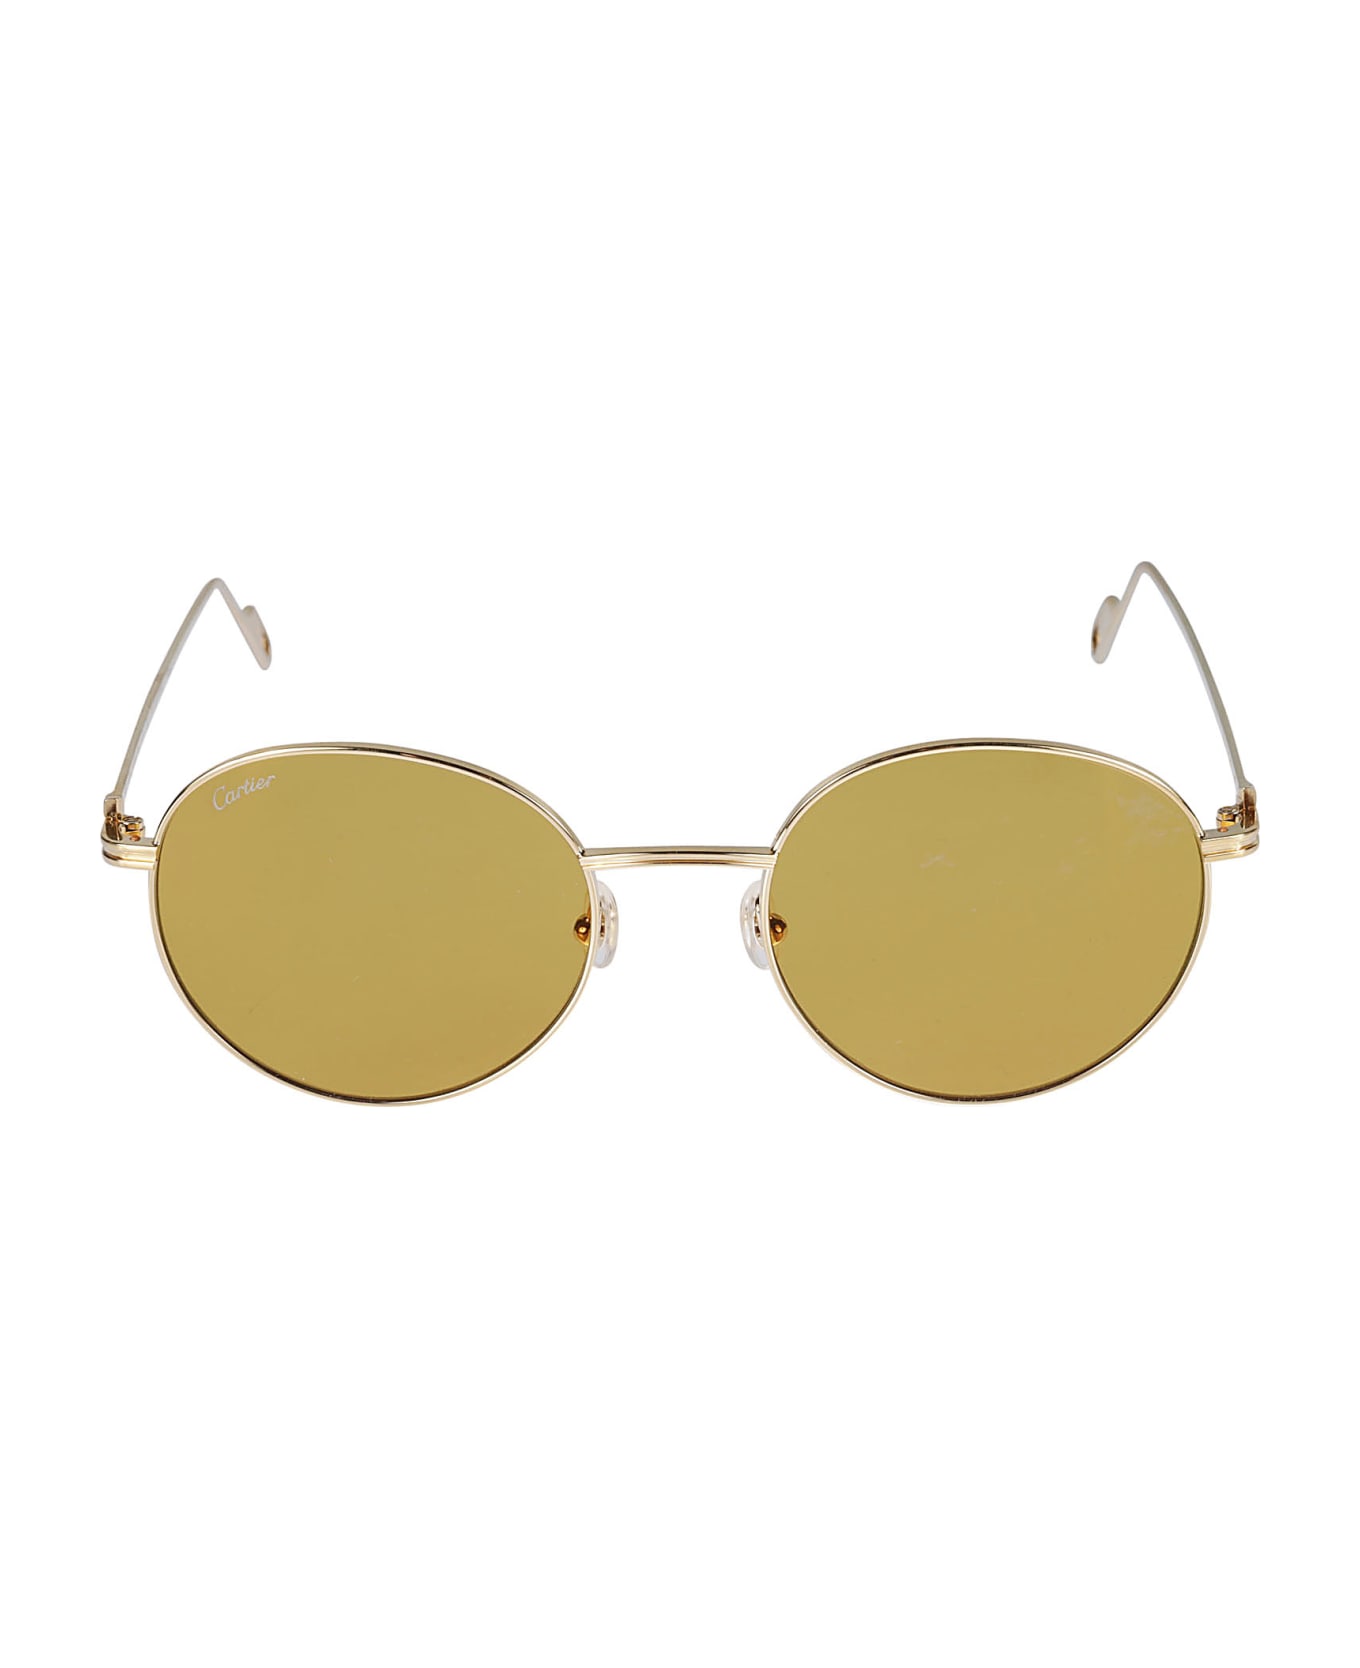 Cartier Eyewear Round Logo Sunglasses - 004 gold gold yellow